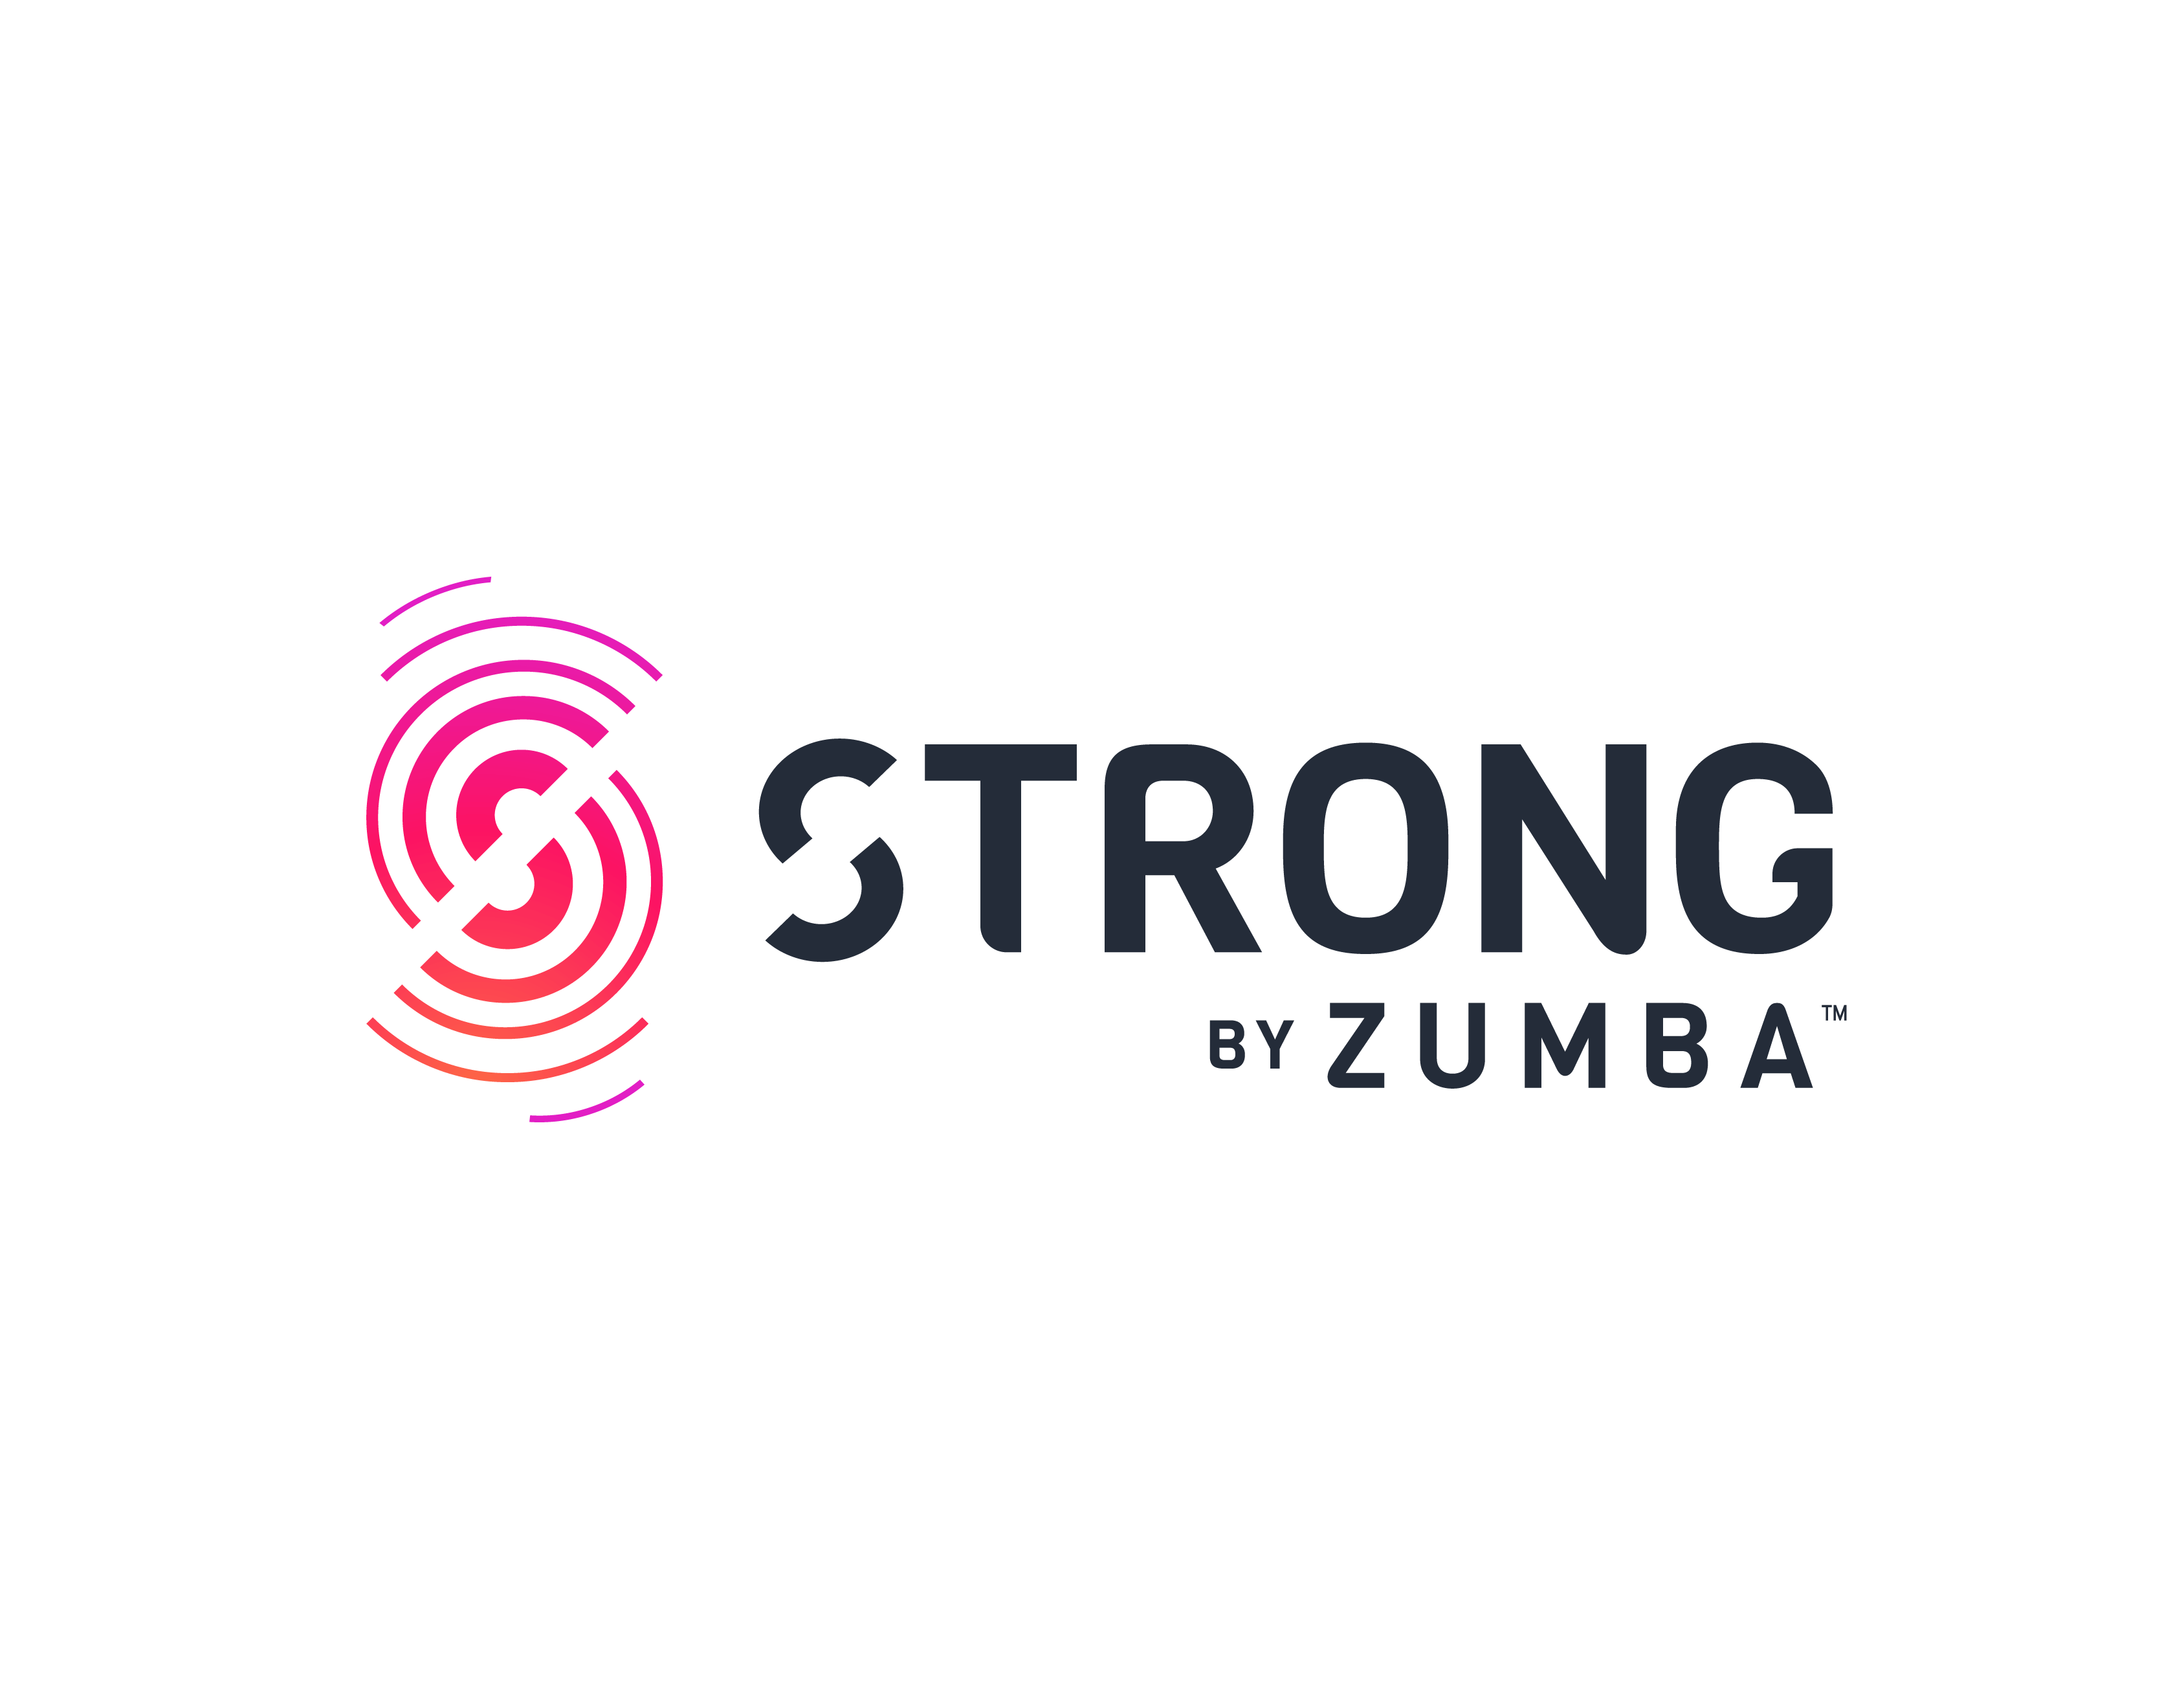 Strong by Zumba Logo - Strong by zumba Logos